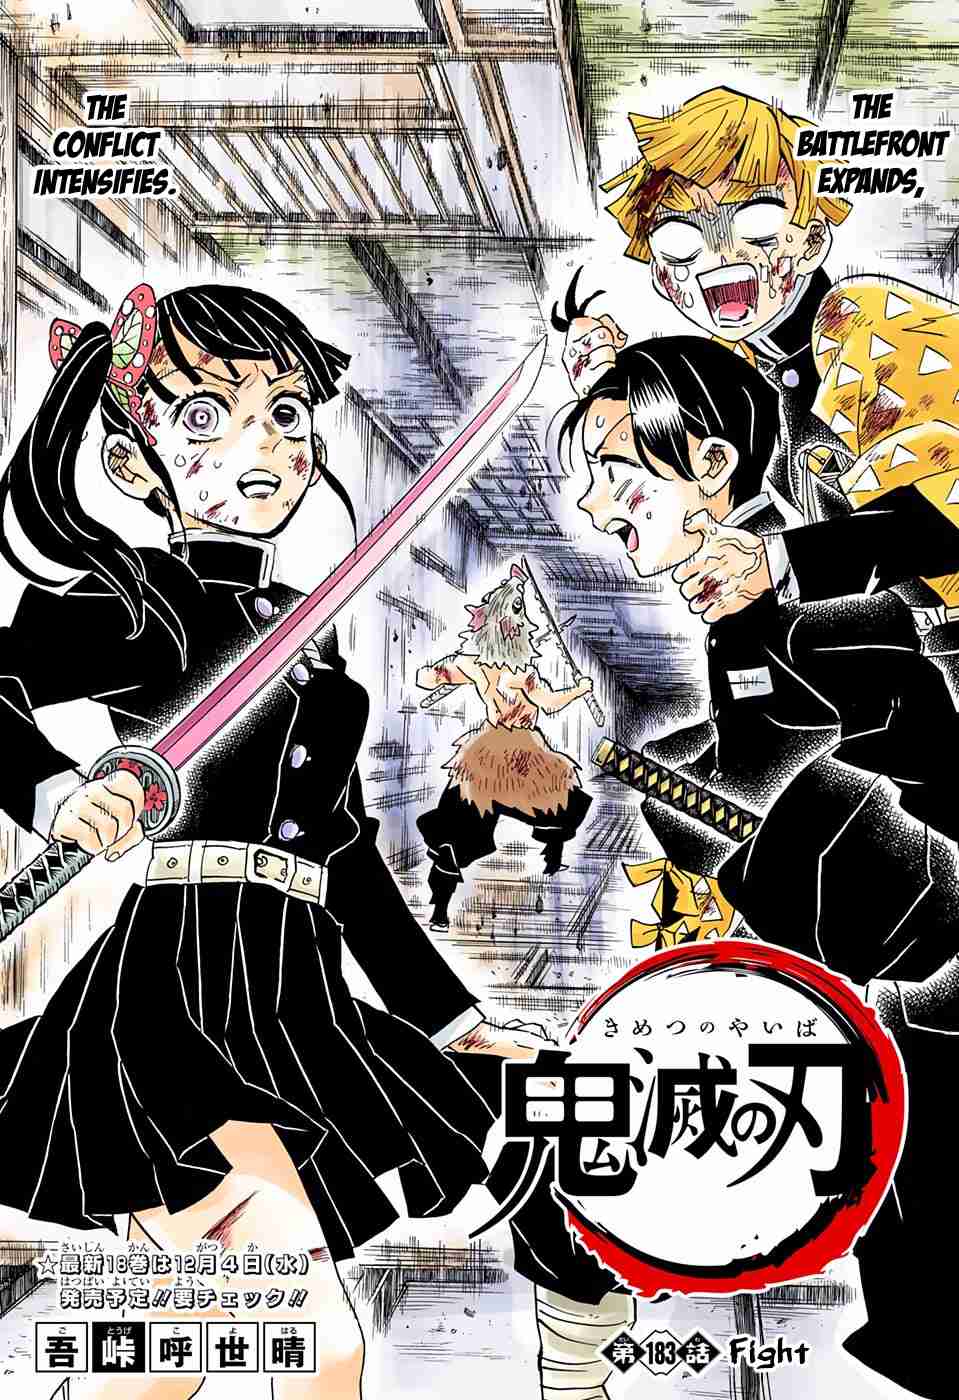 Kimetsu no Yaiba Digital Colored Comics Ch. 183 Fight